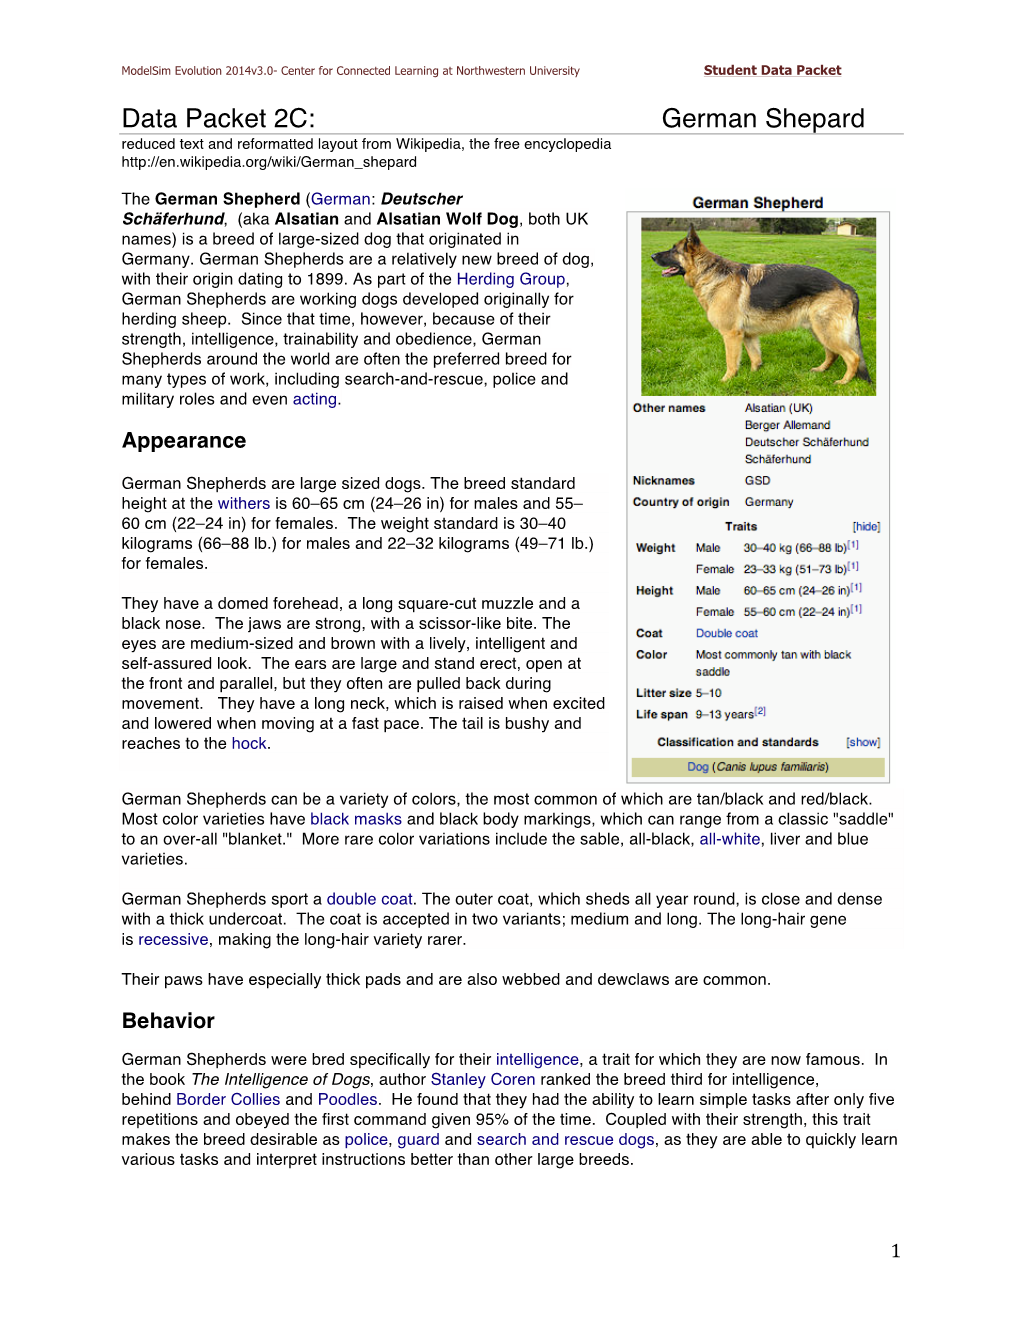 German Shepherd (German: Deutscher Schäferhund, (Aka Alsatian and Alsatian Wolf Dog, Both UK Names) Is a Breed of Large-Sized Dog That Originated in Germany